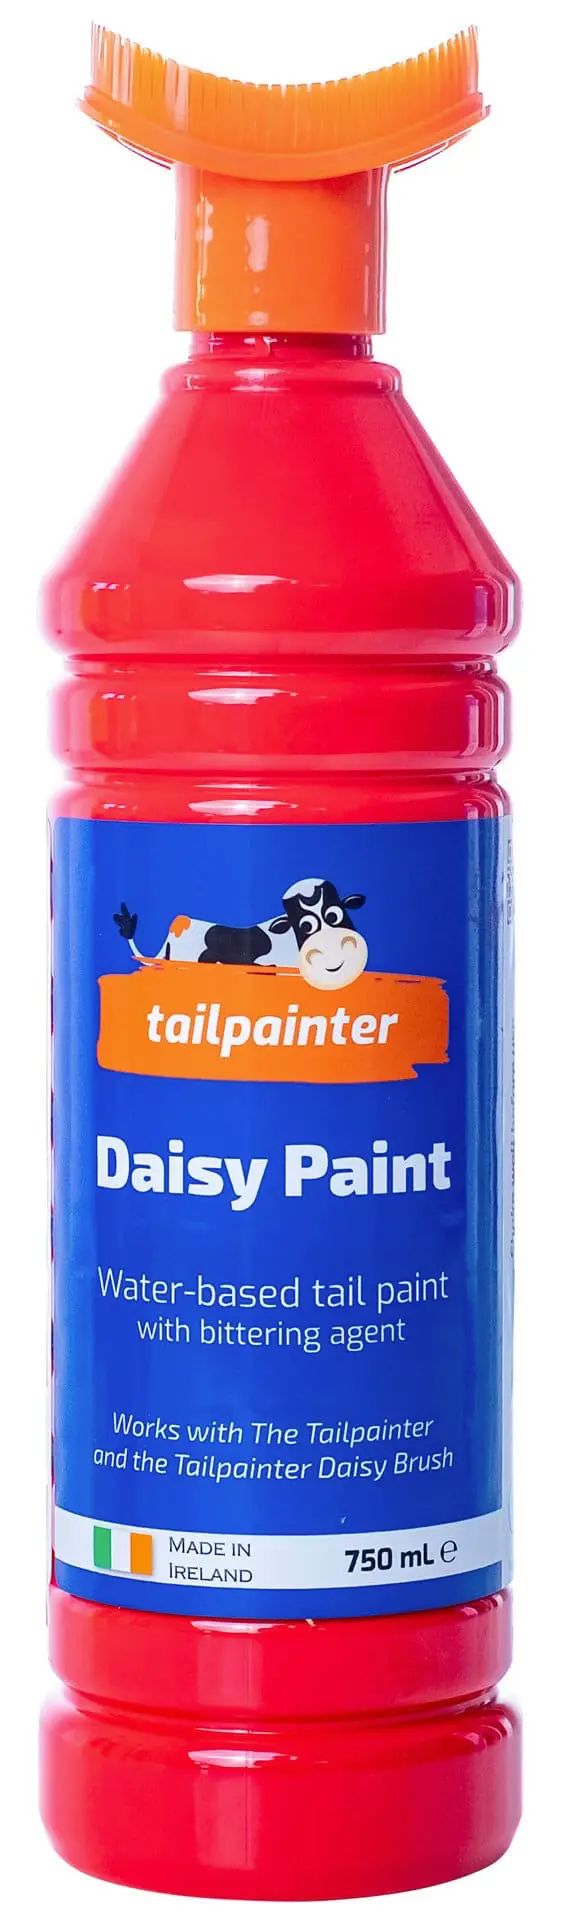 Daisy Paint Tail Paint incl. Brush